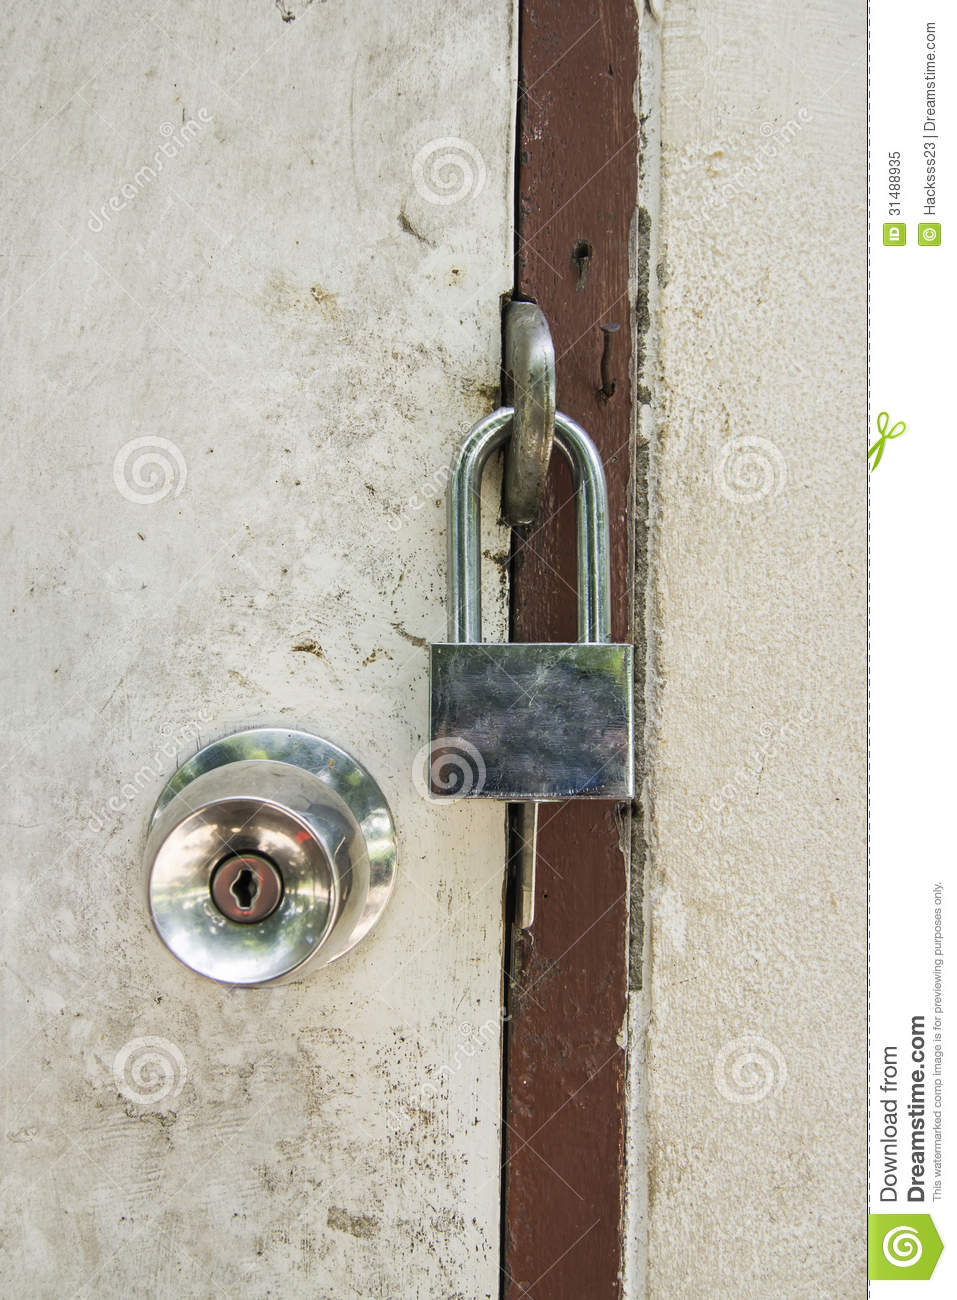 door knob with lock and key photo - 2